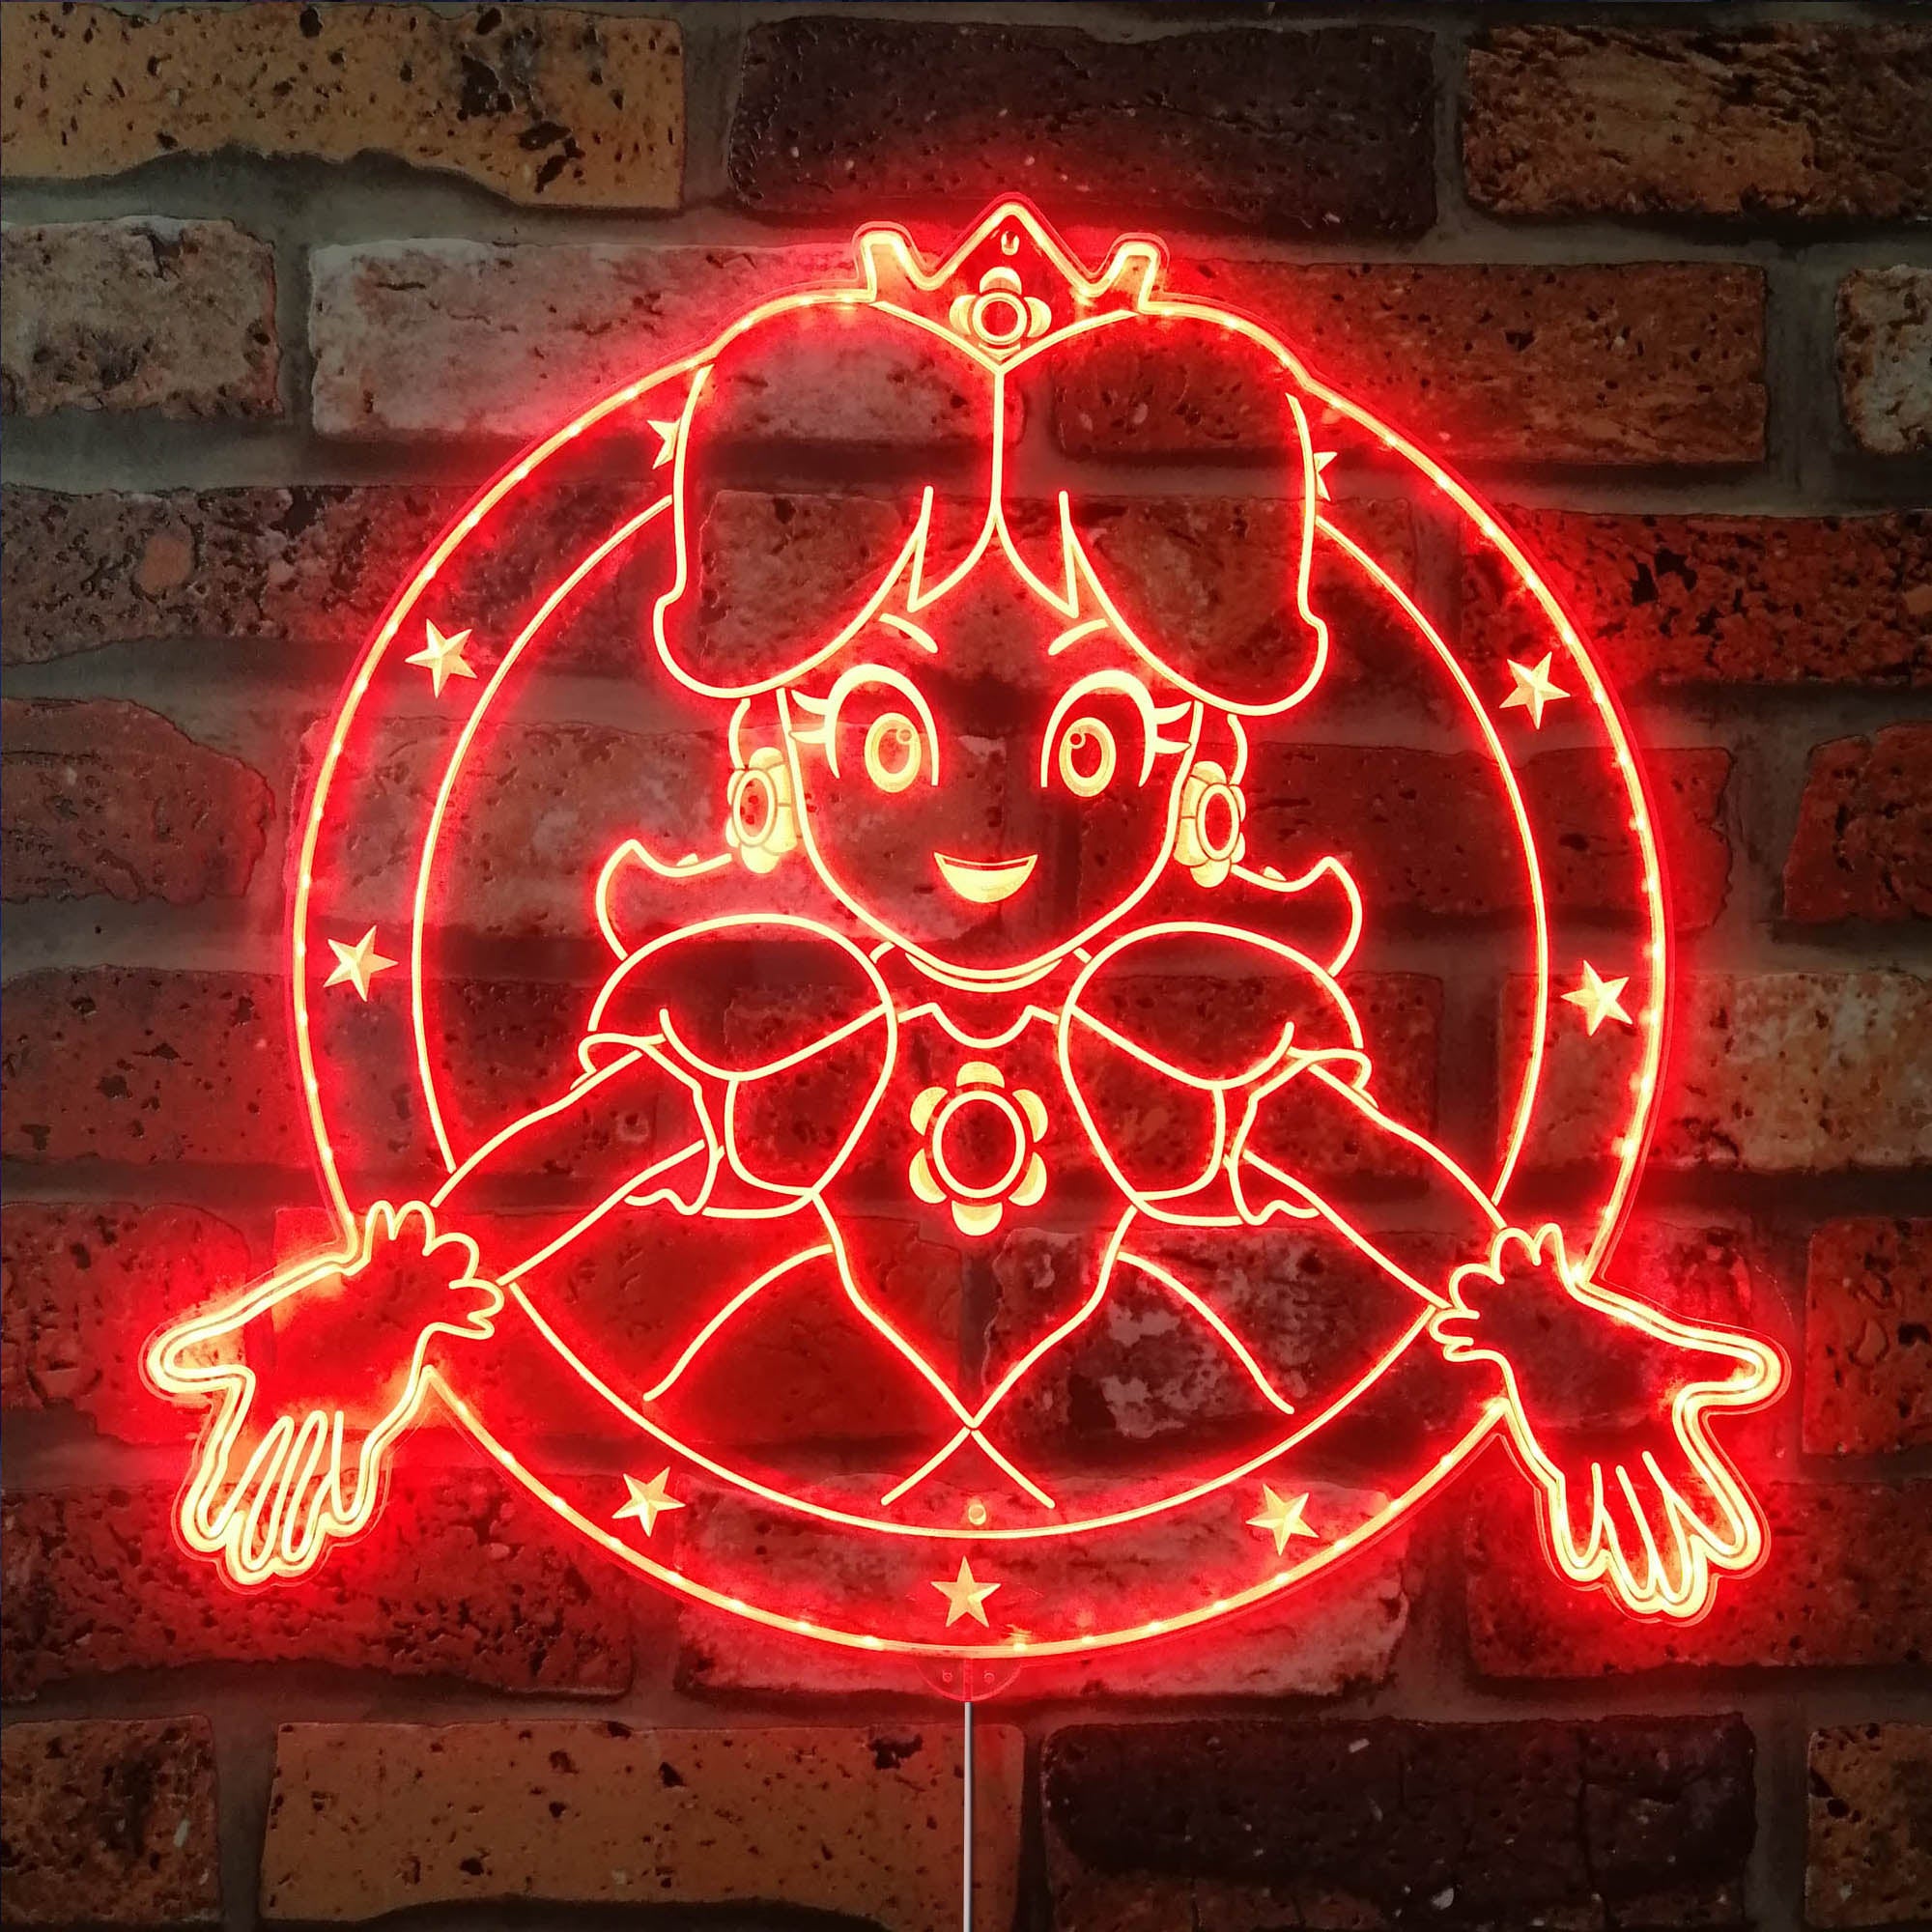 Super Mario Princess Dynamic RGB Edge Lit LED Sign